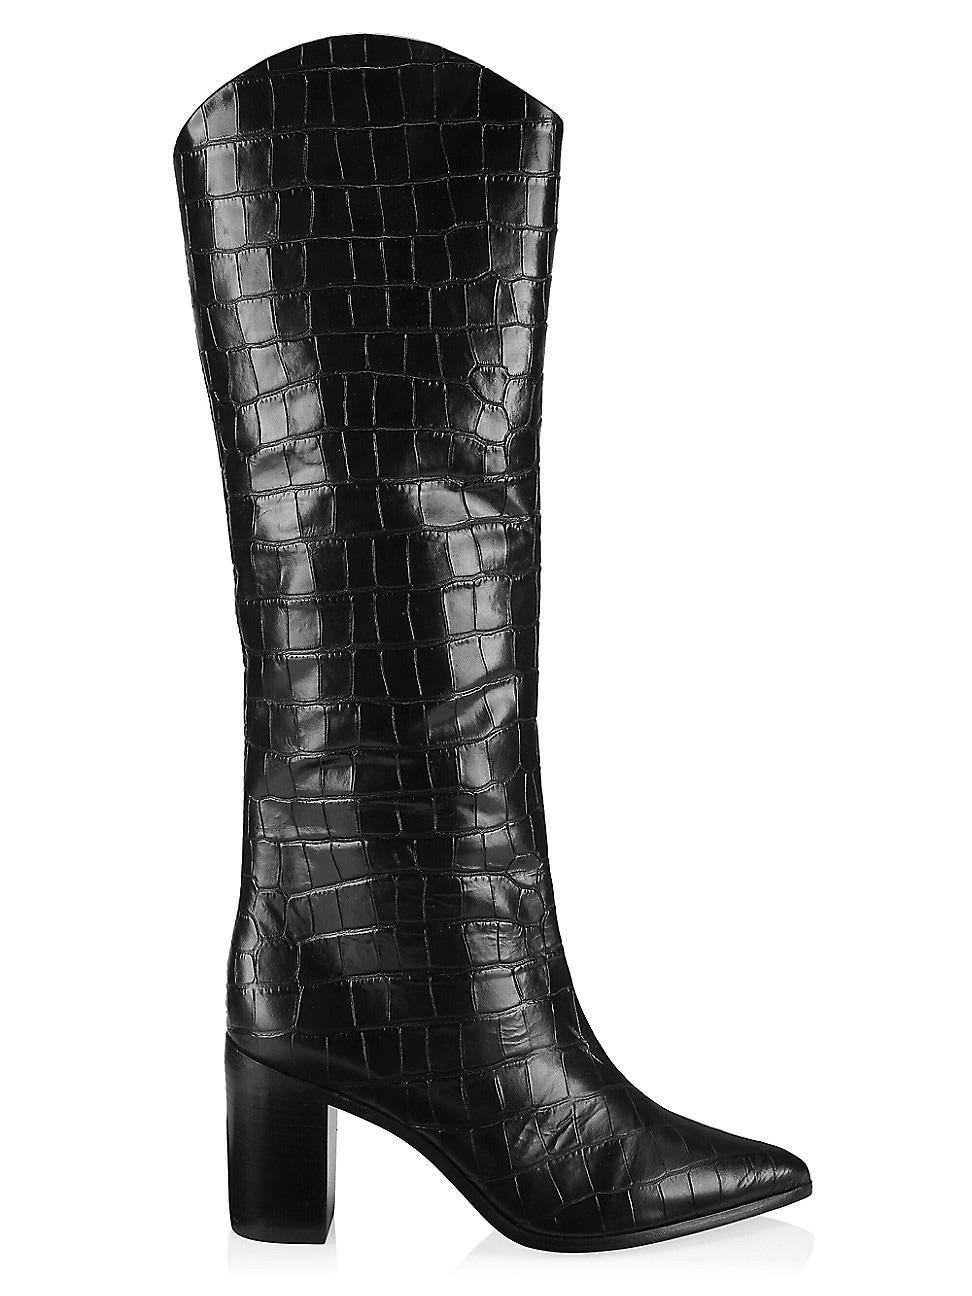 Schutz Maryana Block Pointed Toe Knee High Boot Product Image